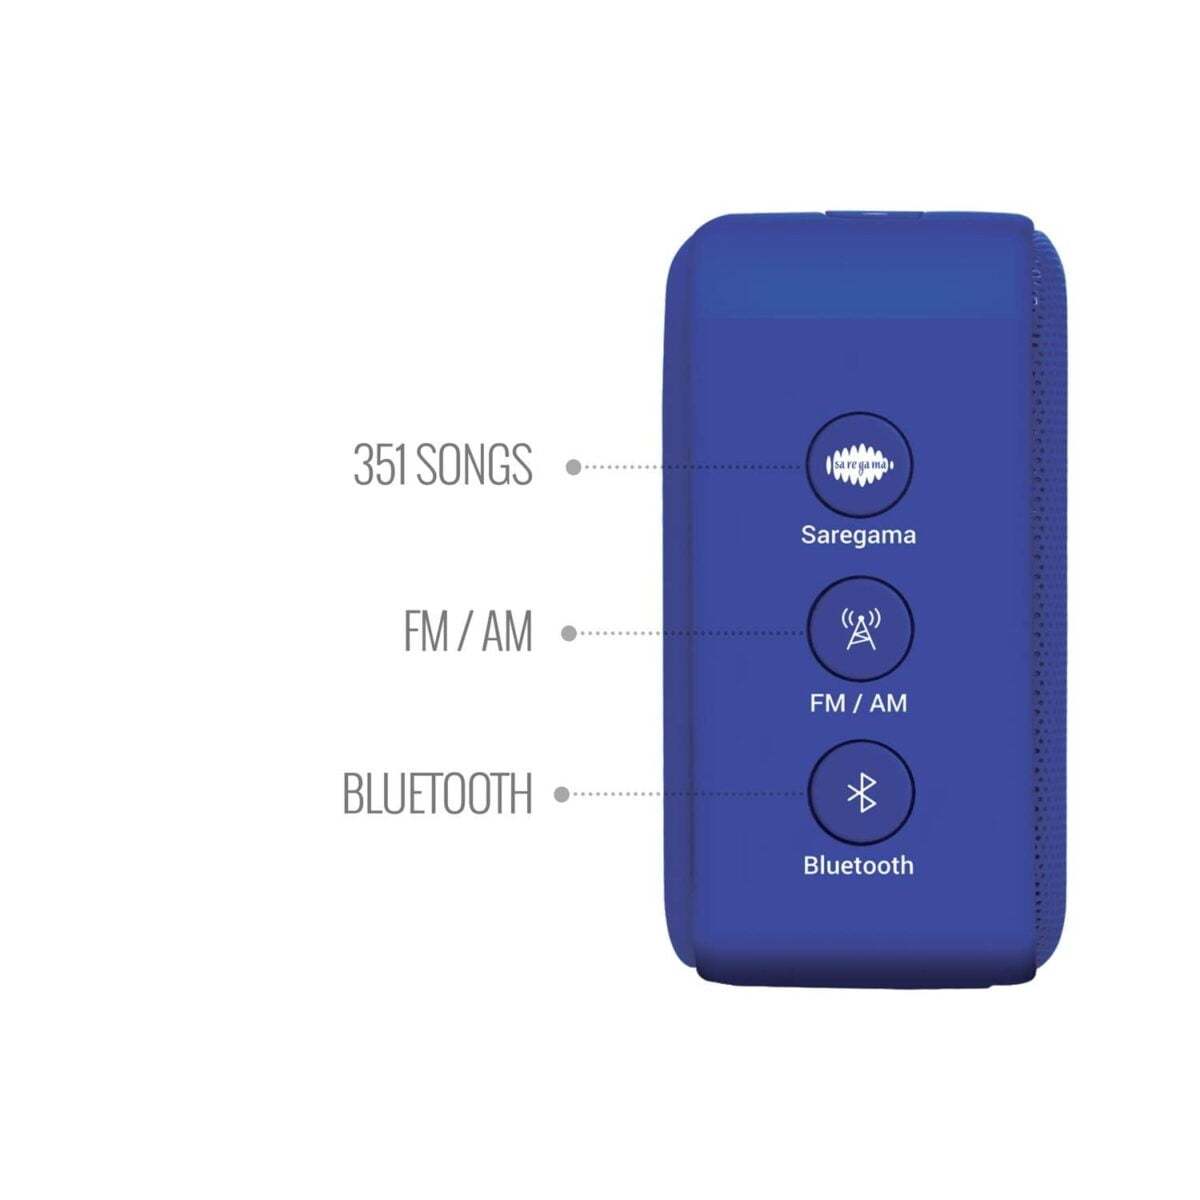 Saregama Carvaan mini Blue 5 Shop Mobile Accessories Online in India